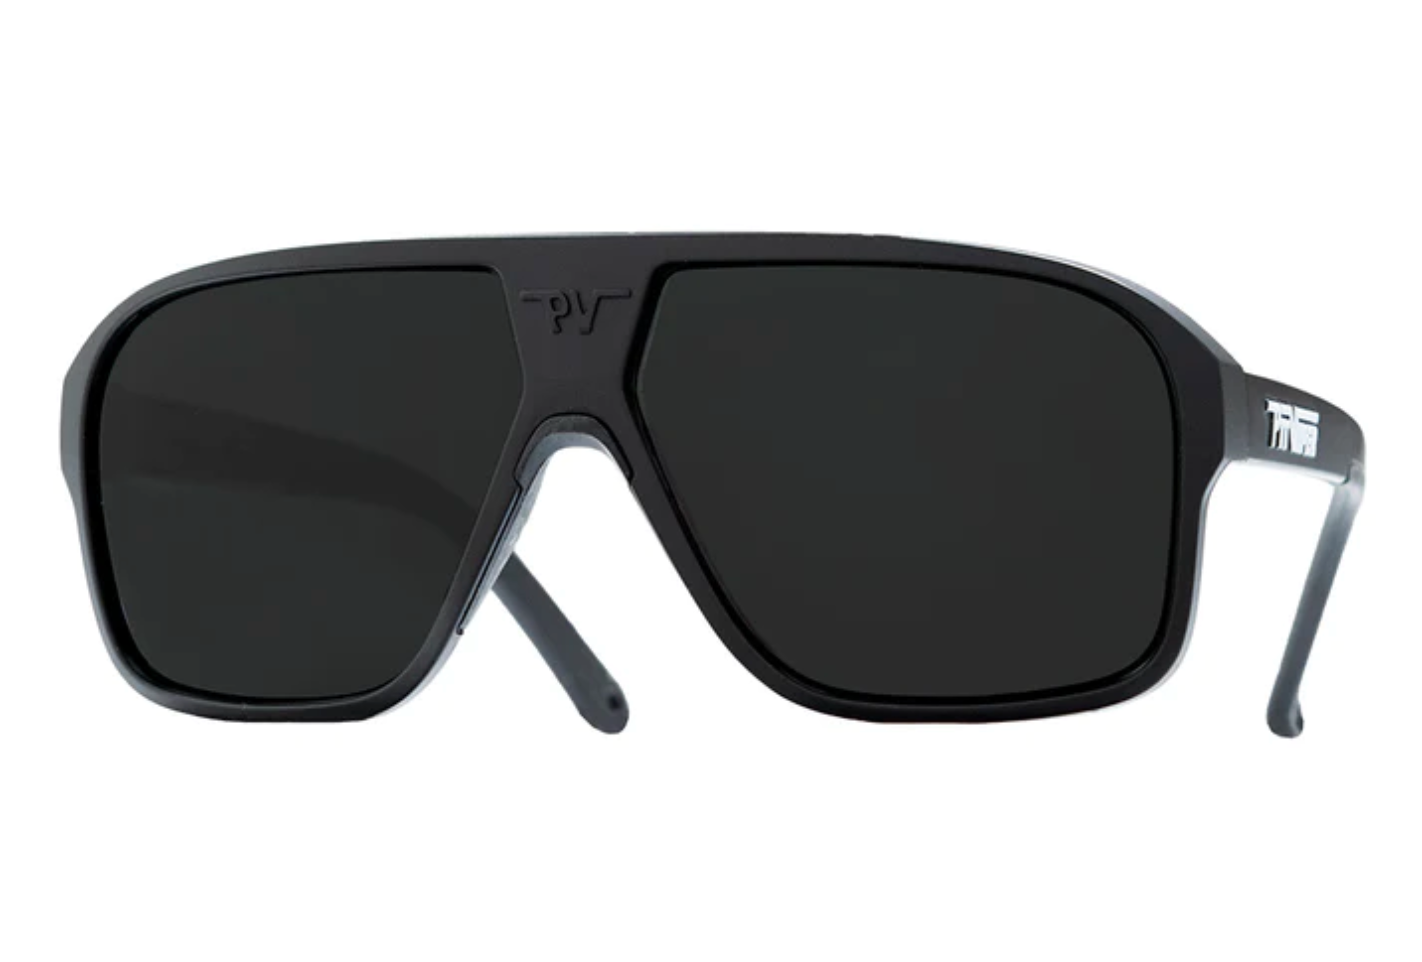 Pit Viper Sunglasses Flight Optics The Standard Polarized